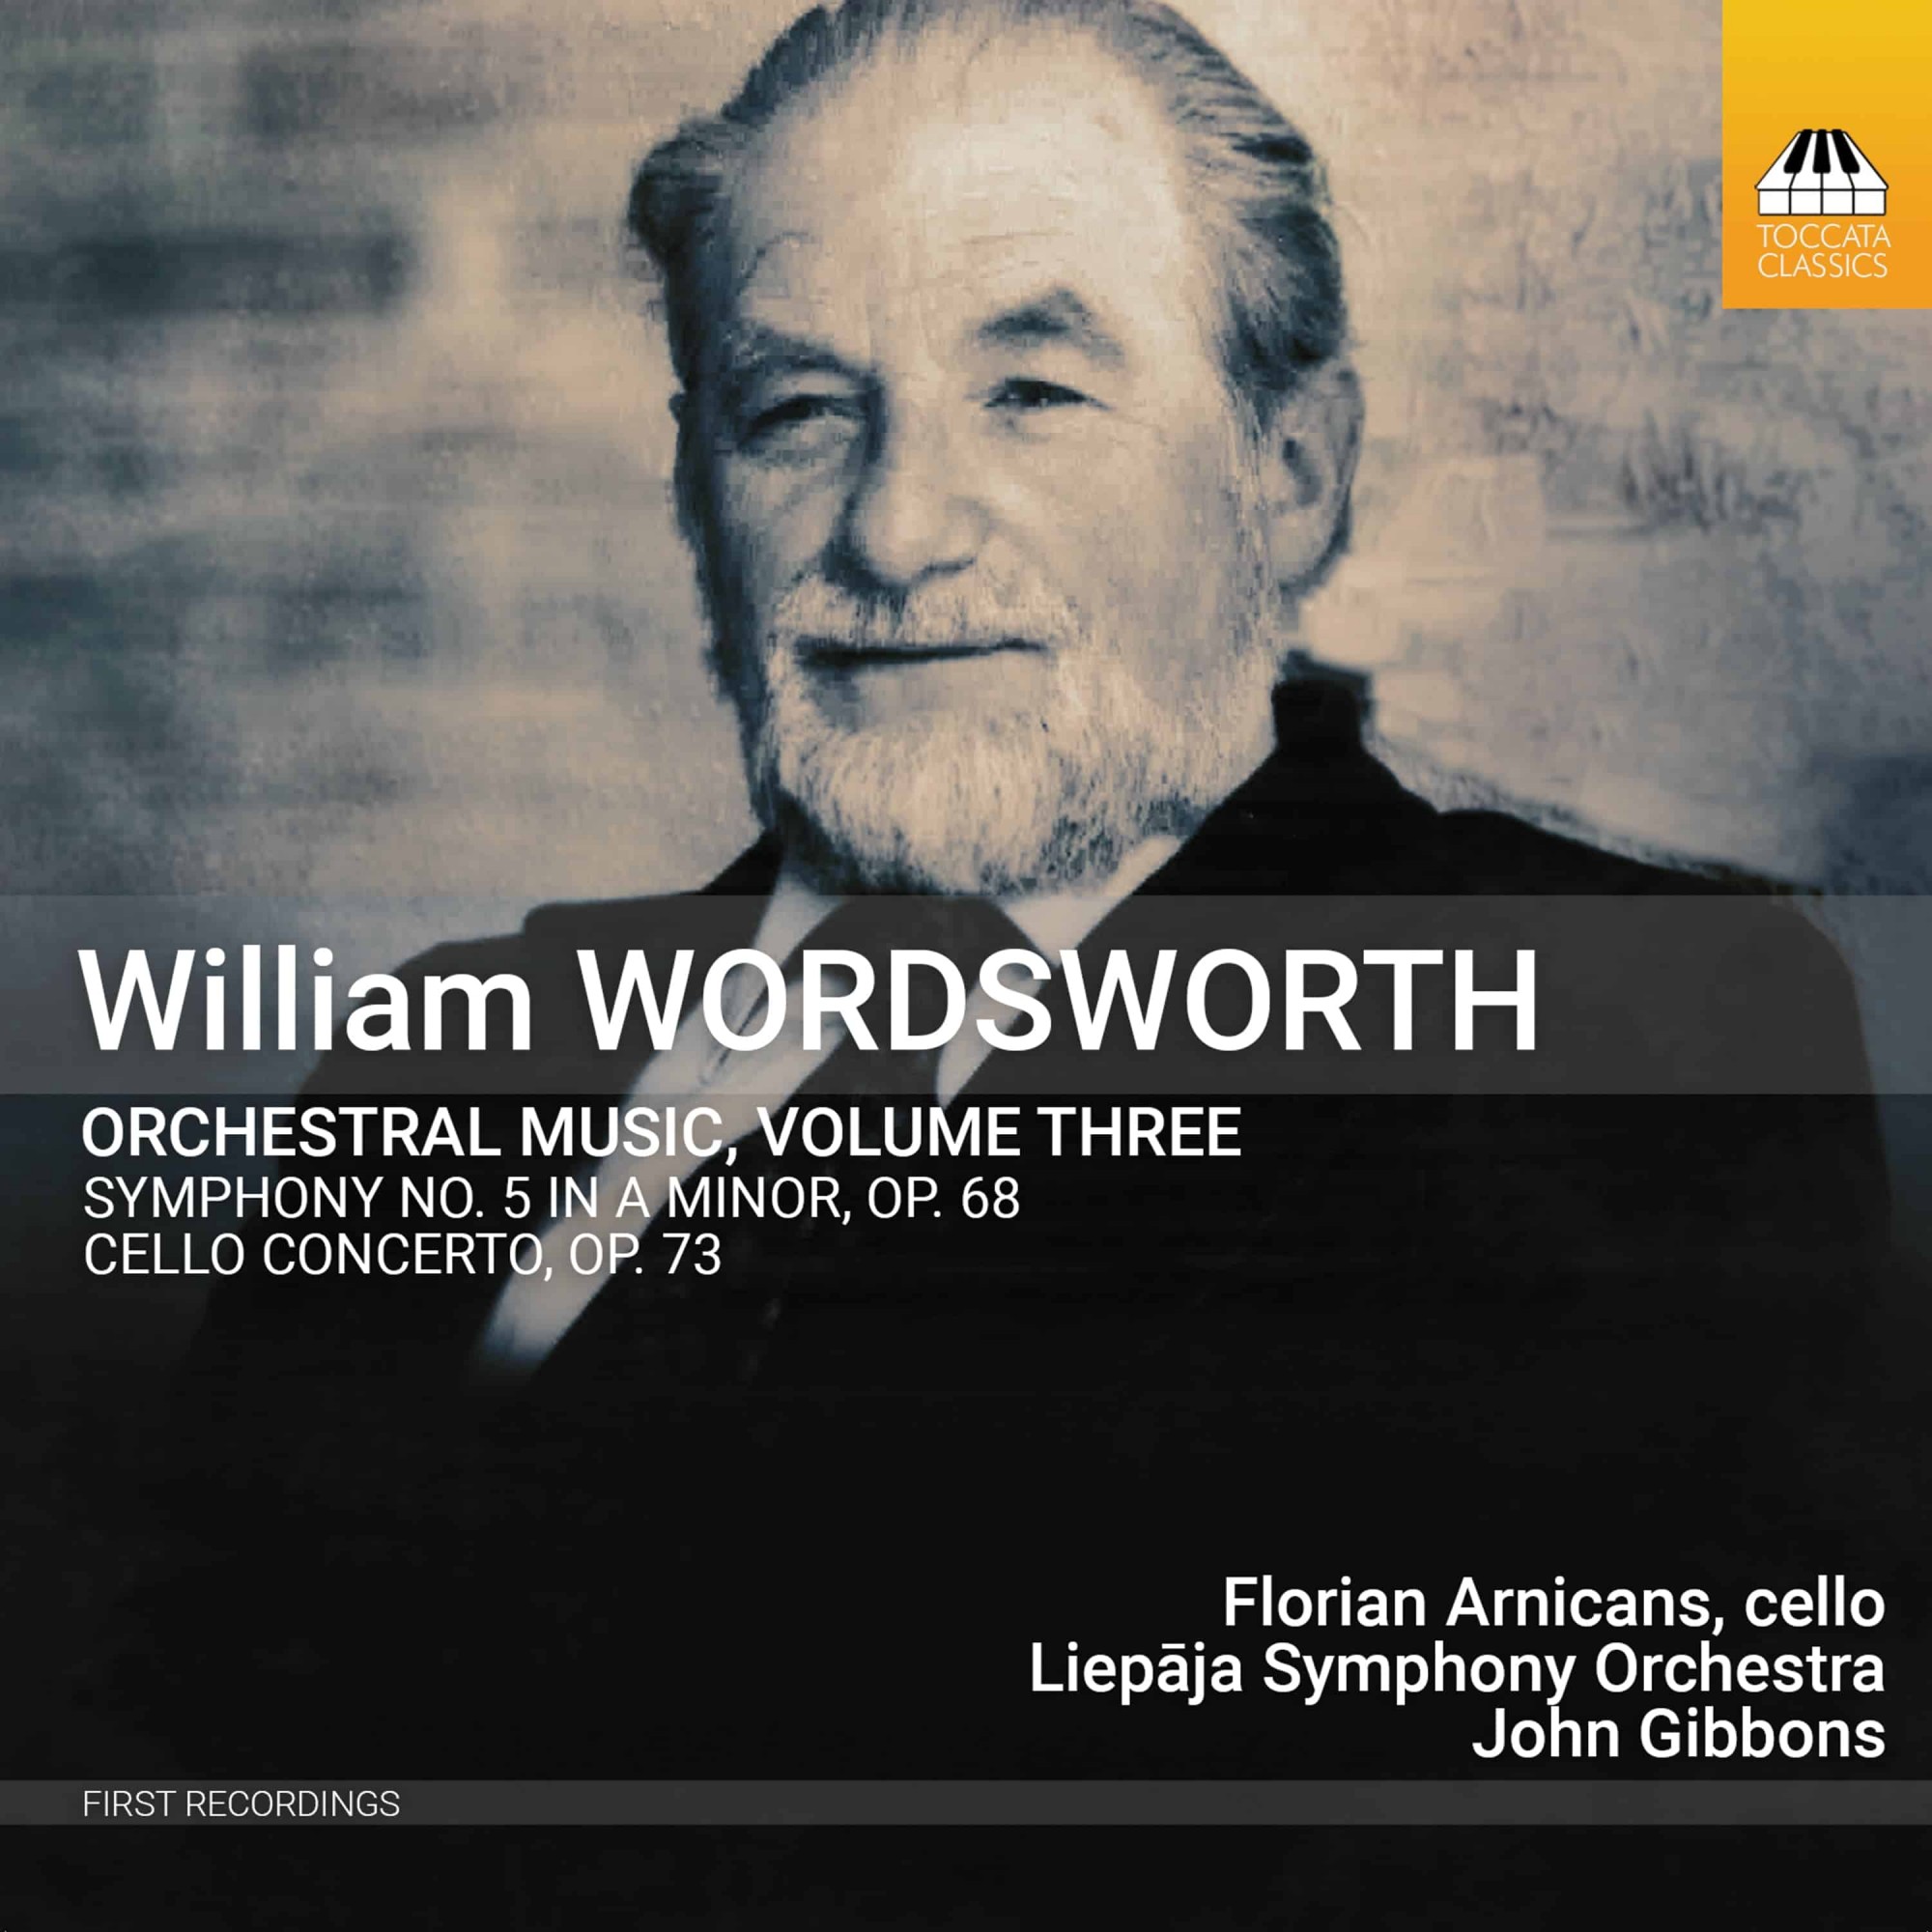 WILLIAM WORDSWORTH: ORCHESTRAL MUSIC, VOLUME THREE